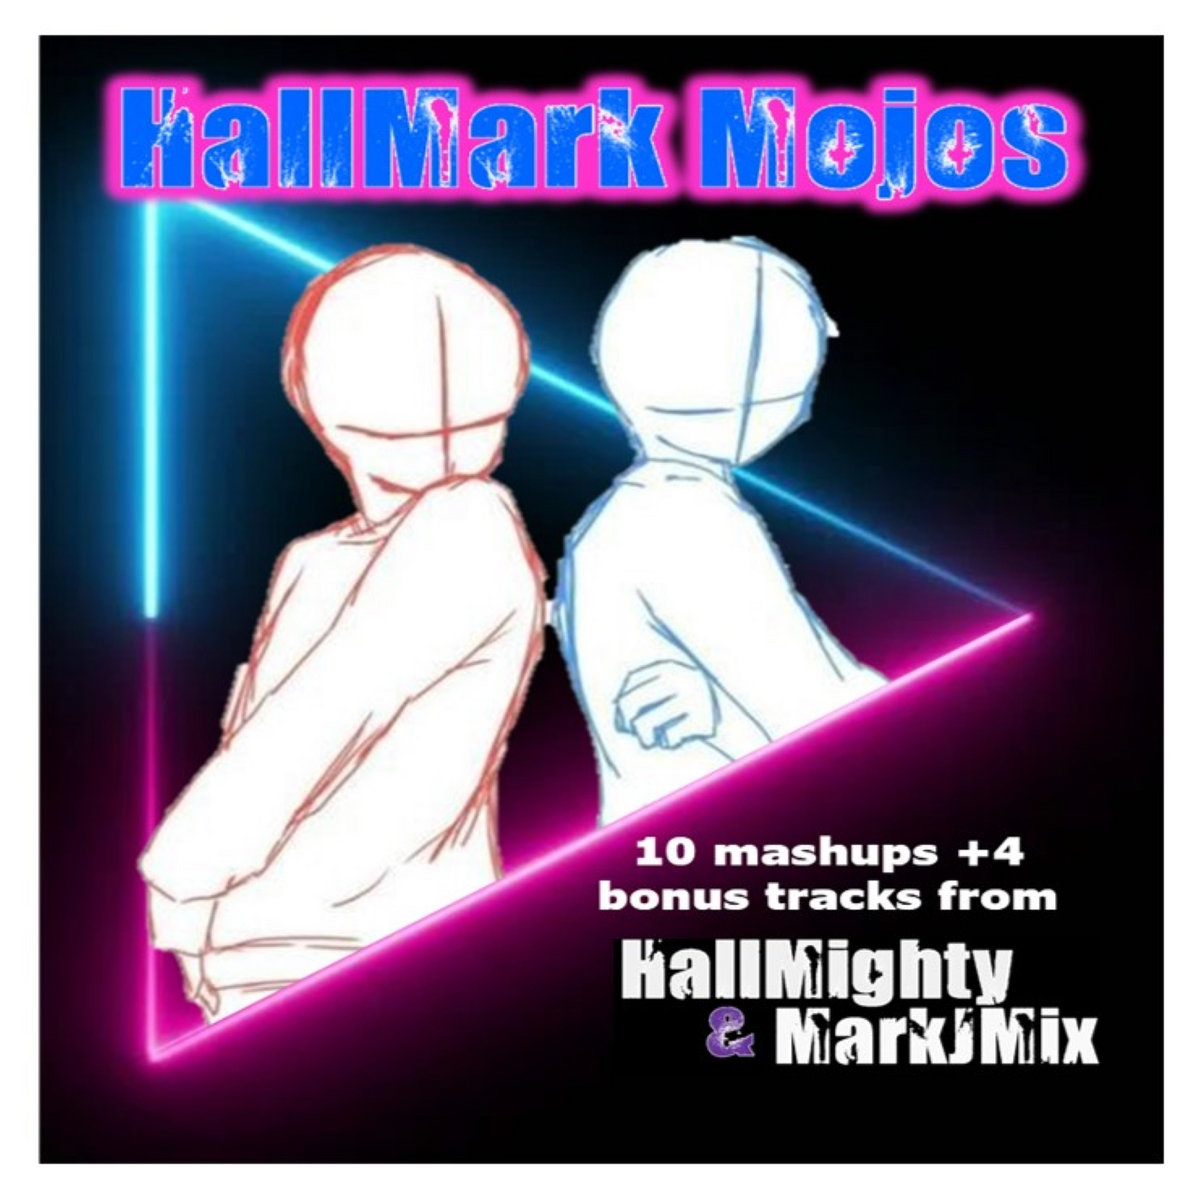 HallMark Mojos spread their magic